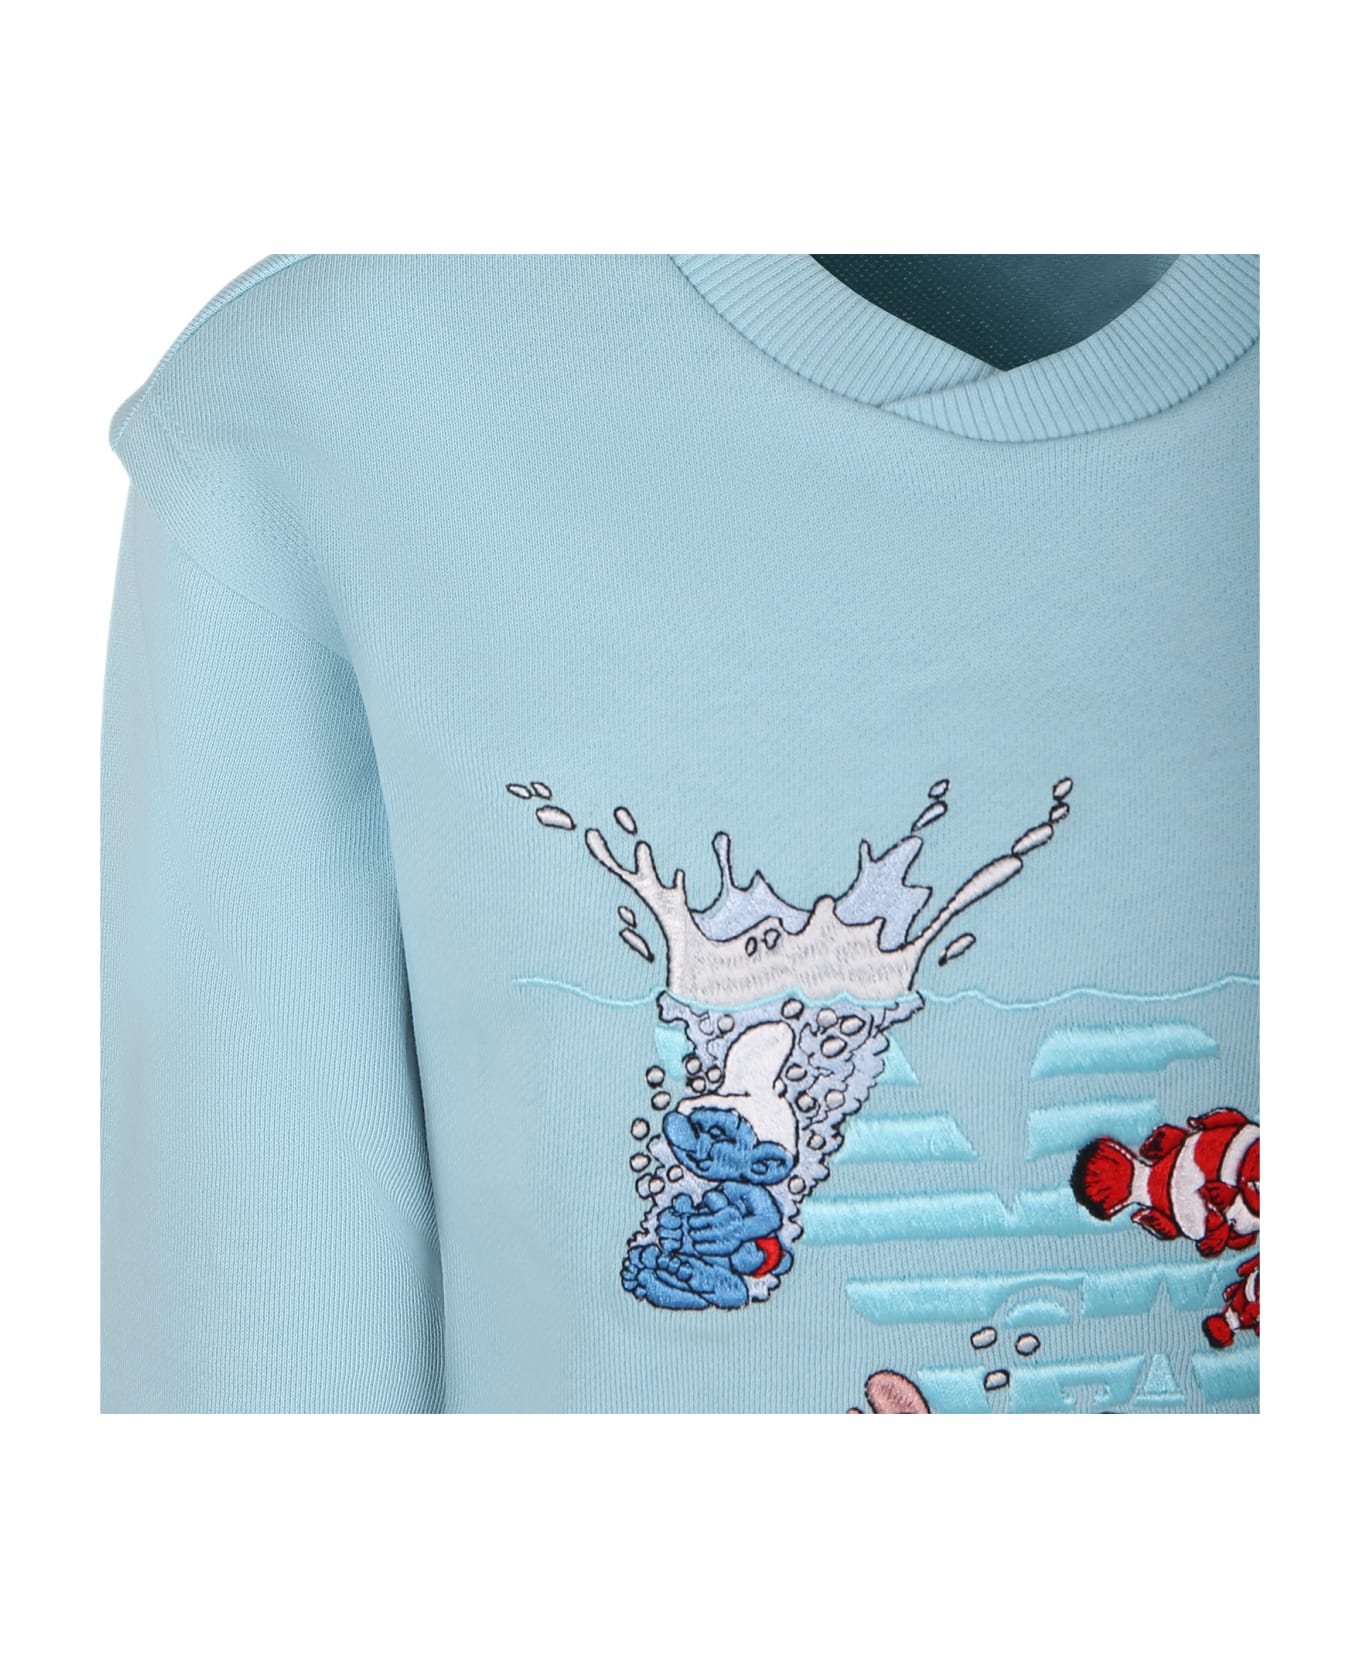 Emporio Armani Sky Blue Sweatshirt For Boy With The Smurfs - Sabbia